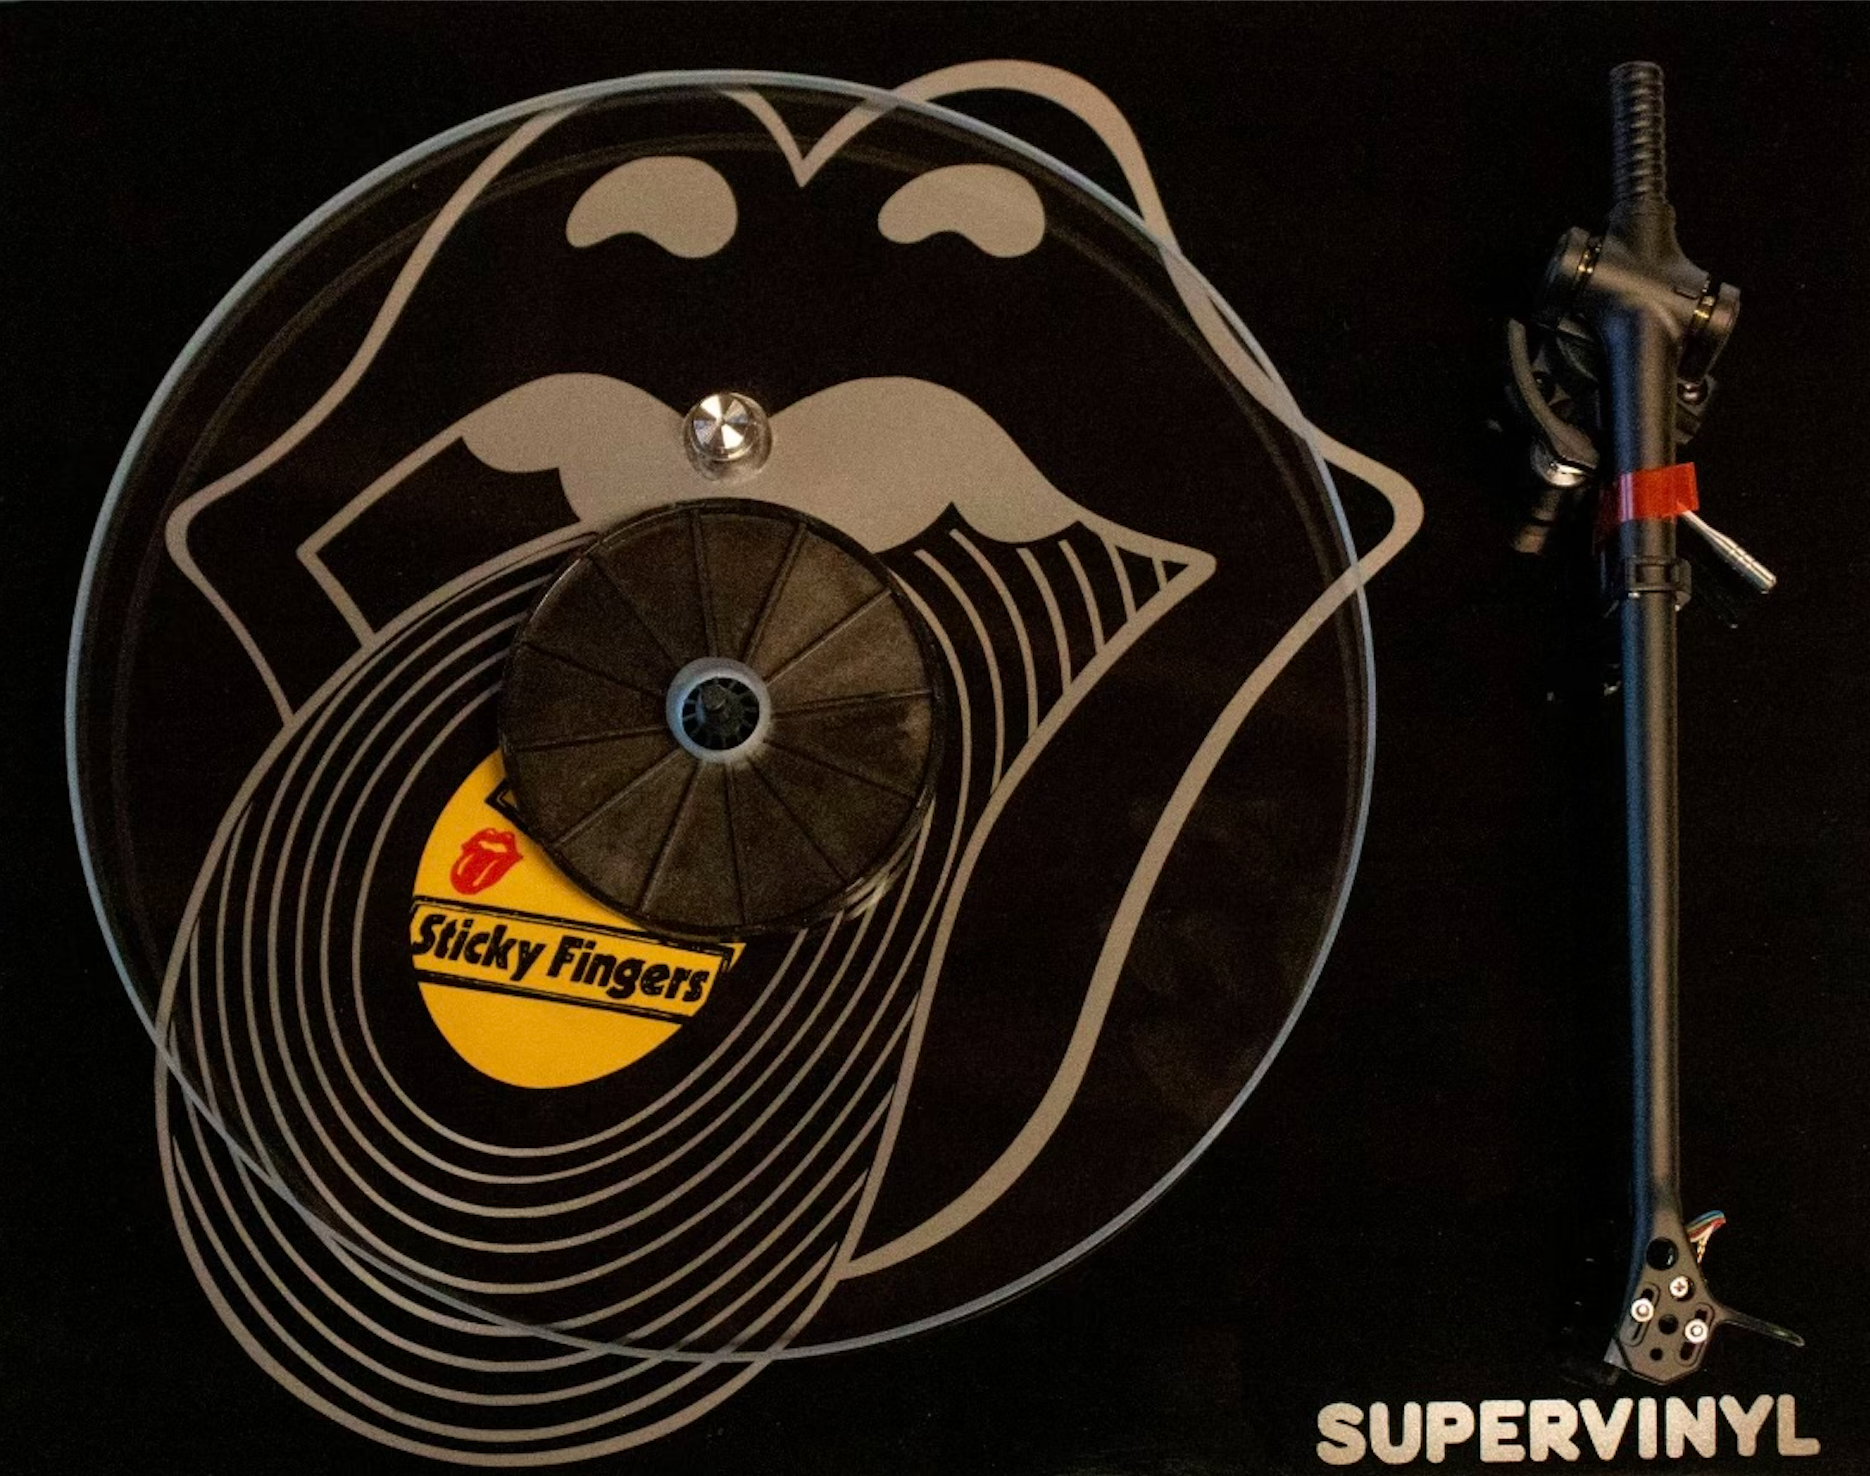 Rolling Stones x SUPERVINYL "Sticky Fingers" Custom Turntable